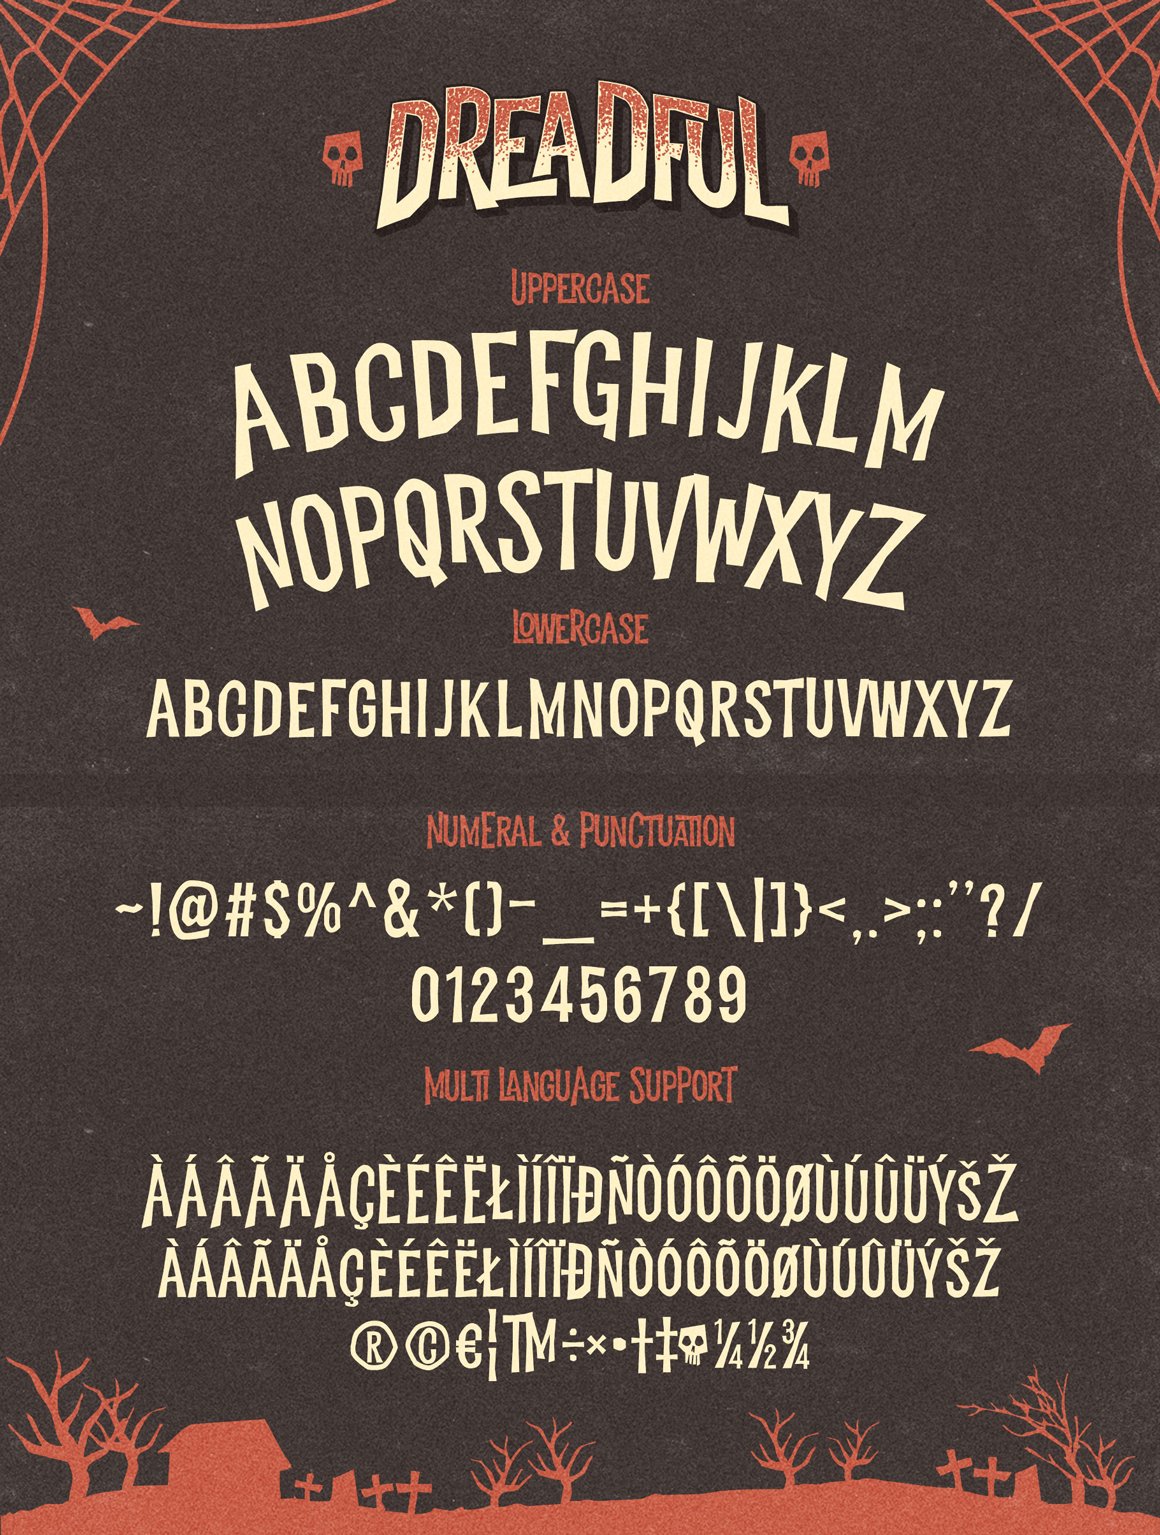 Dreadful - A Spooky Typeface